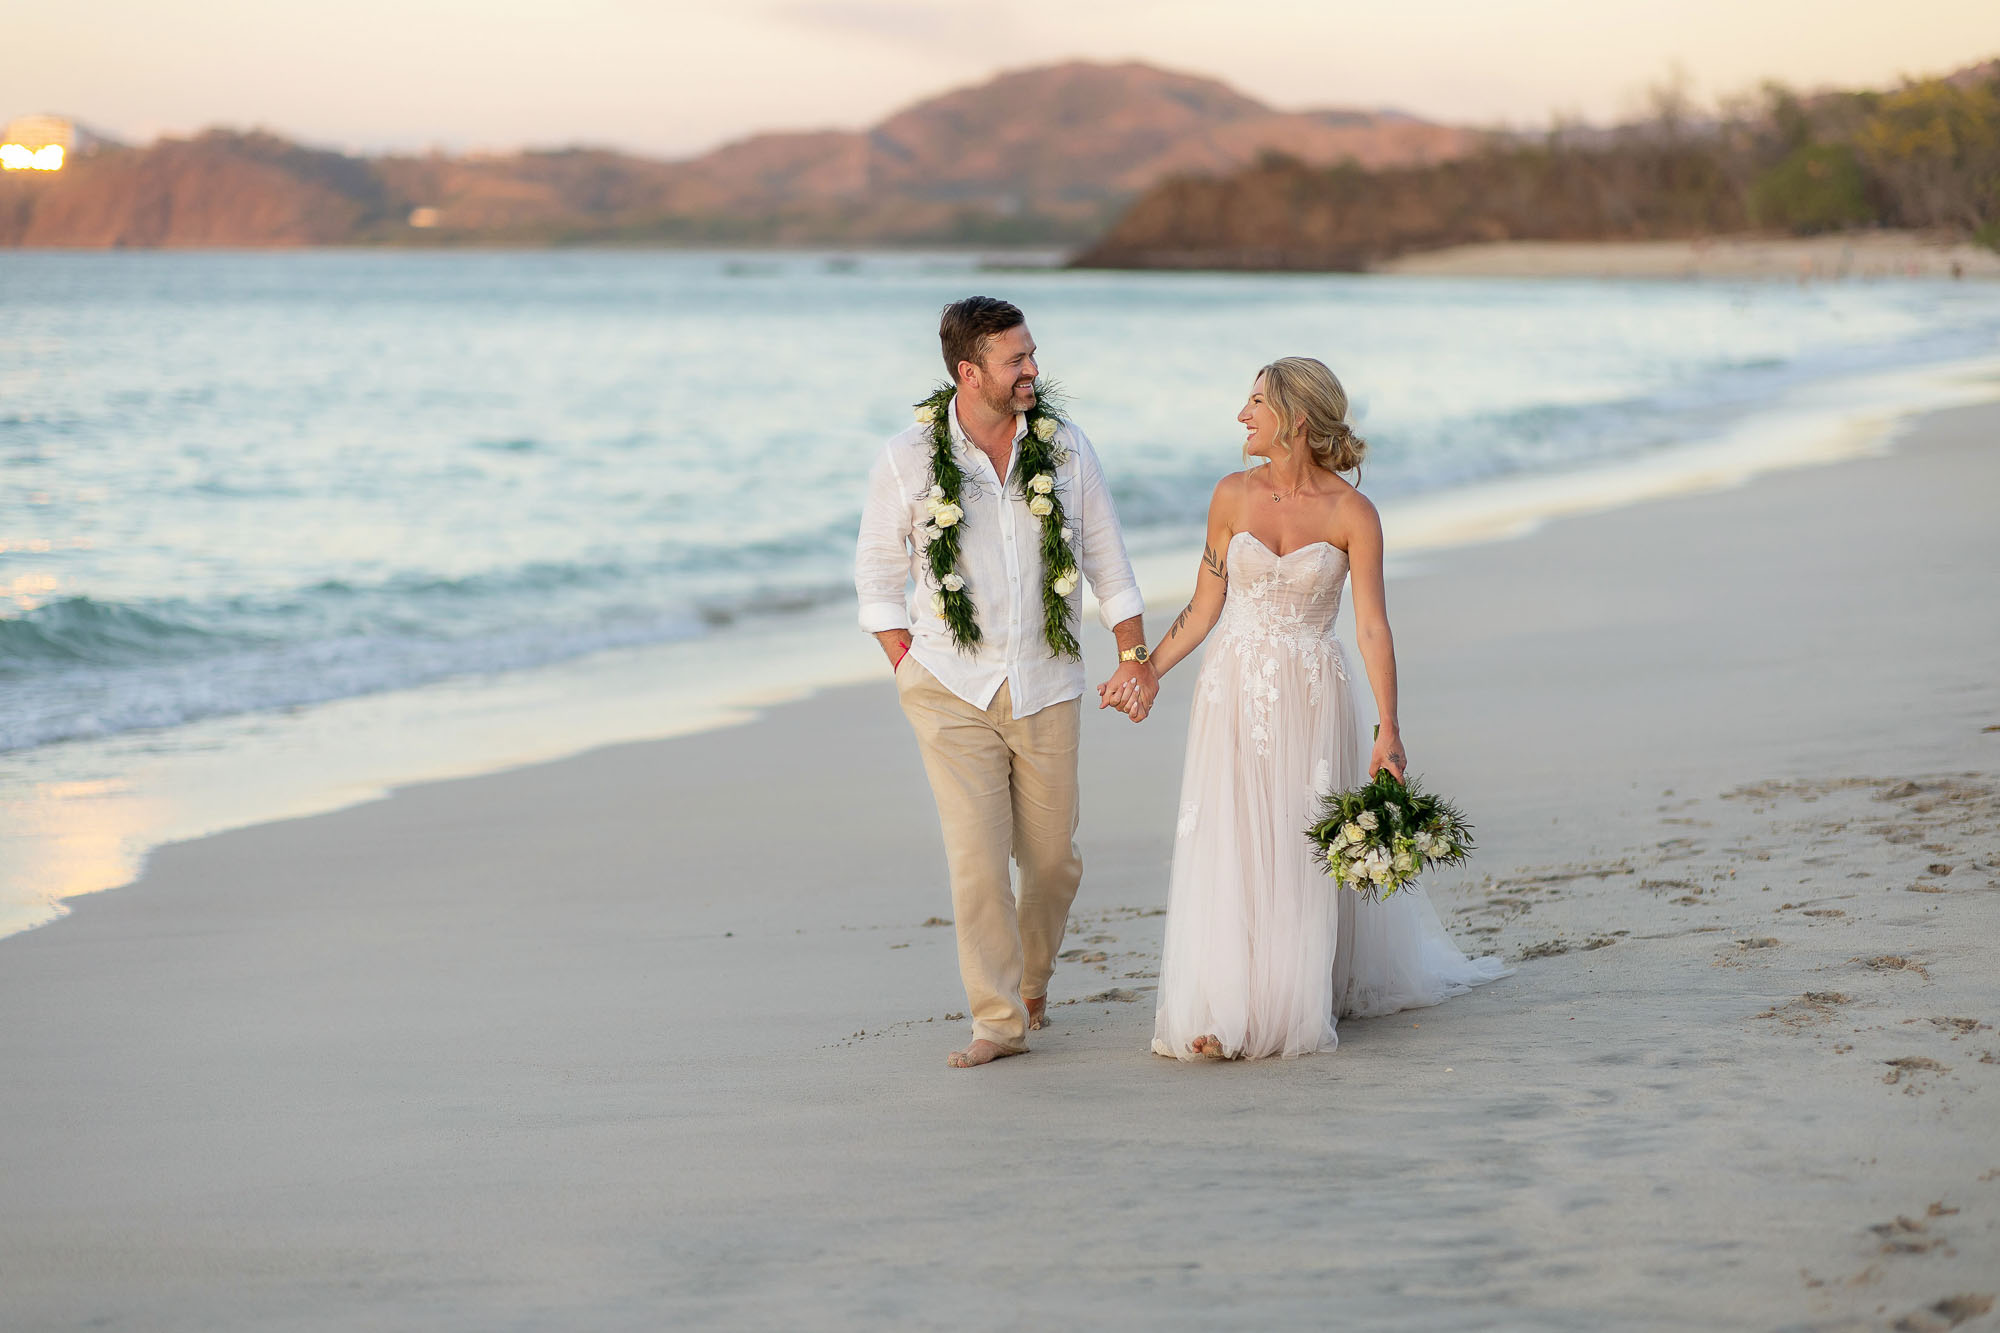 Wedding couple walking on the beach in Costa Rica